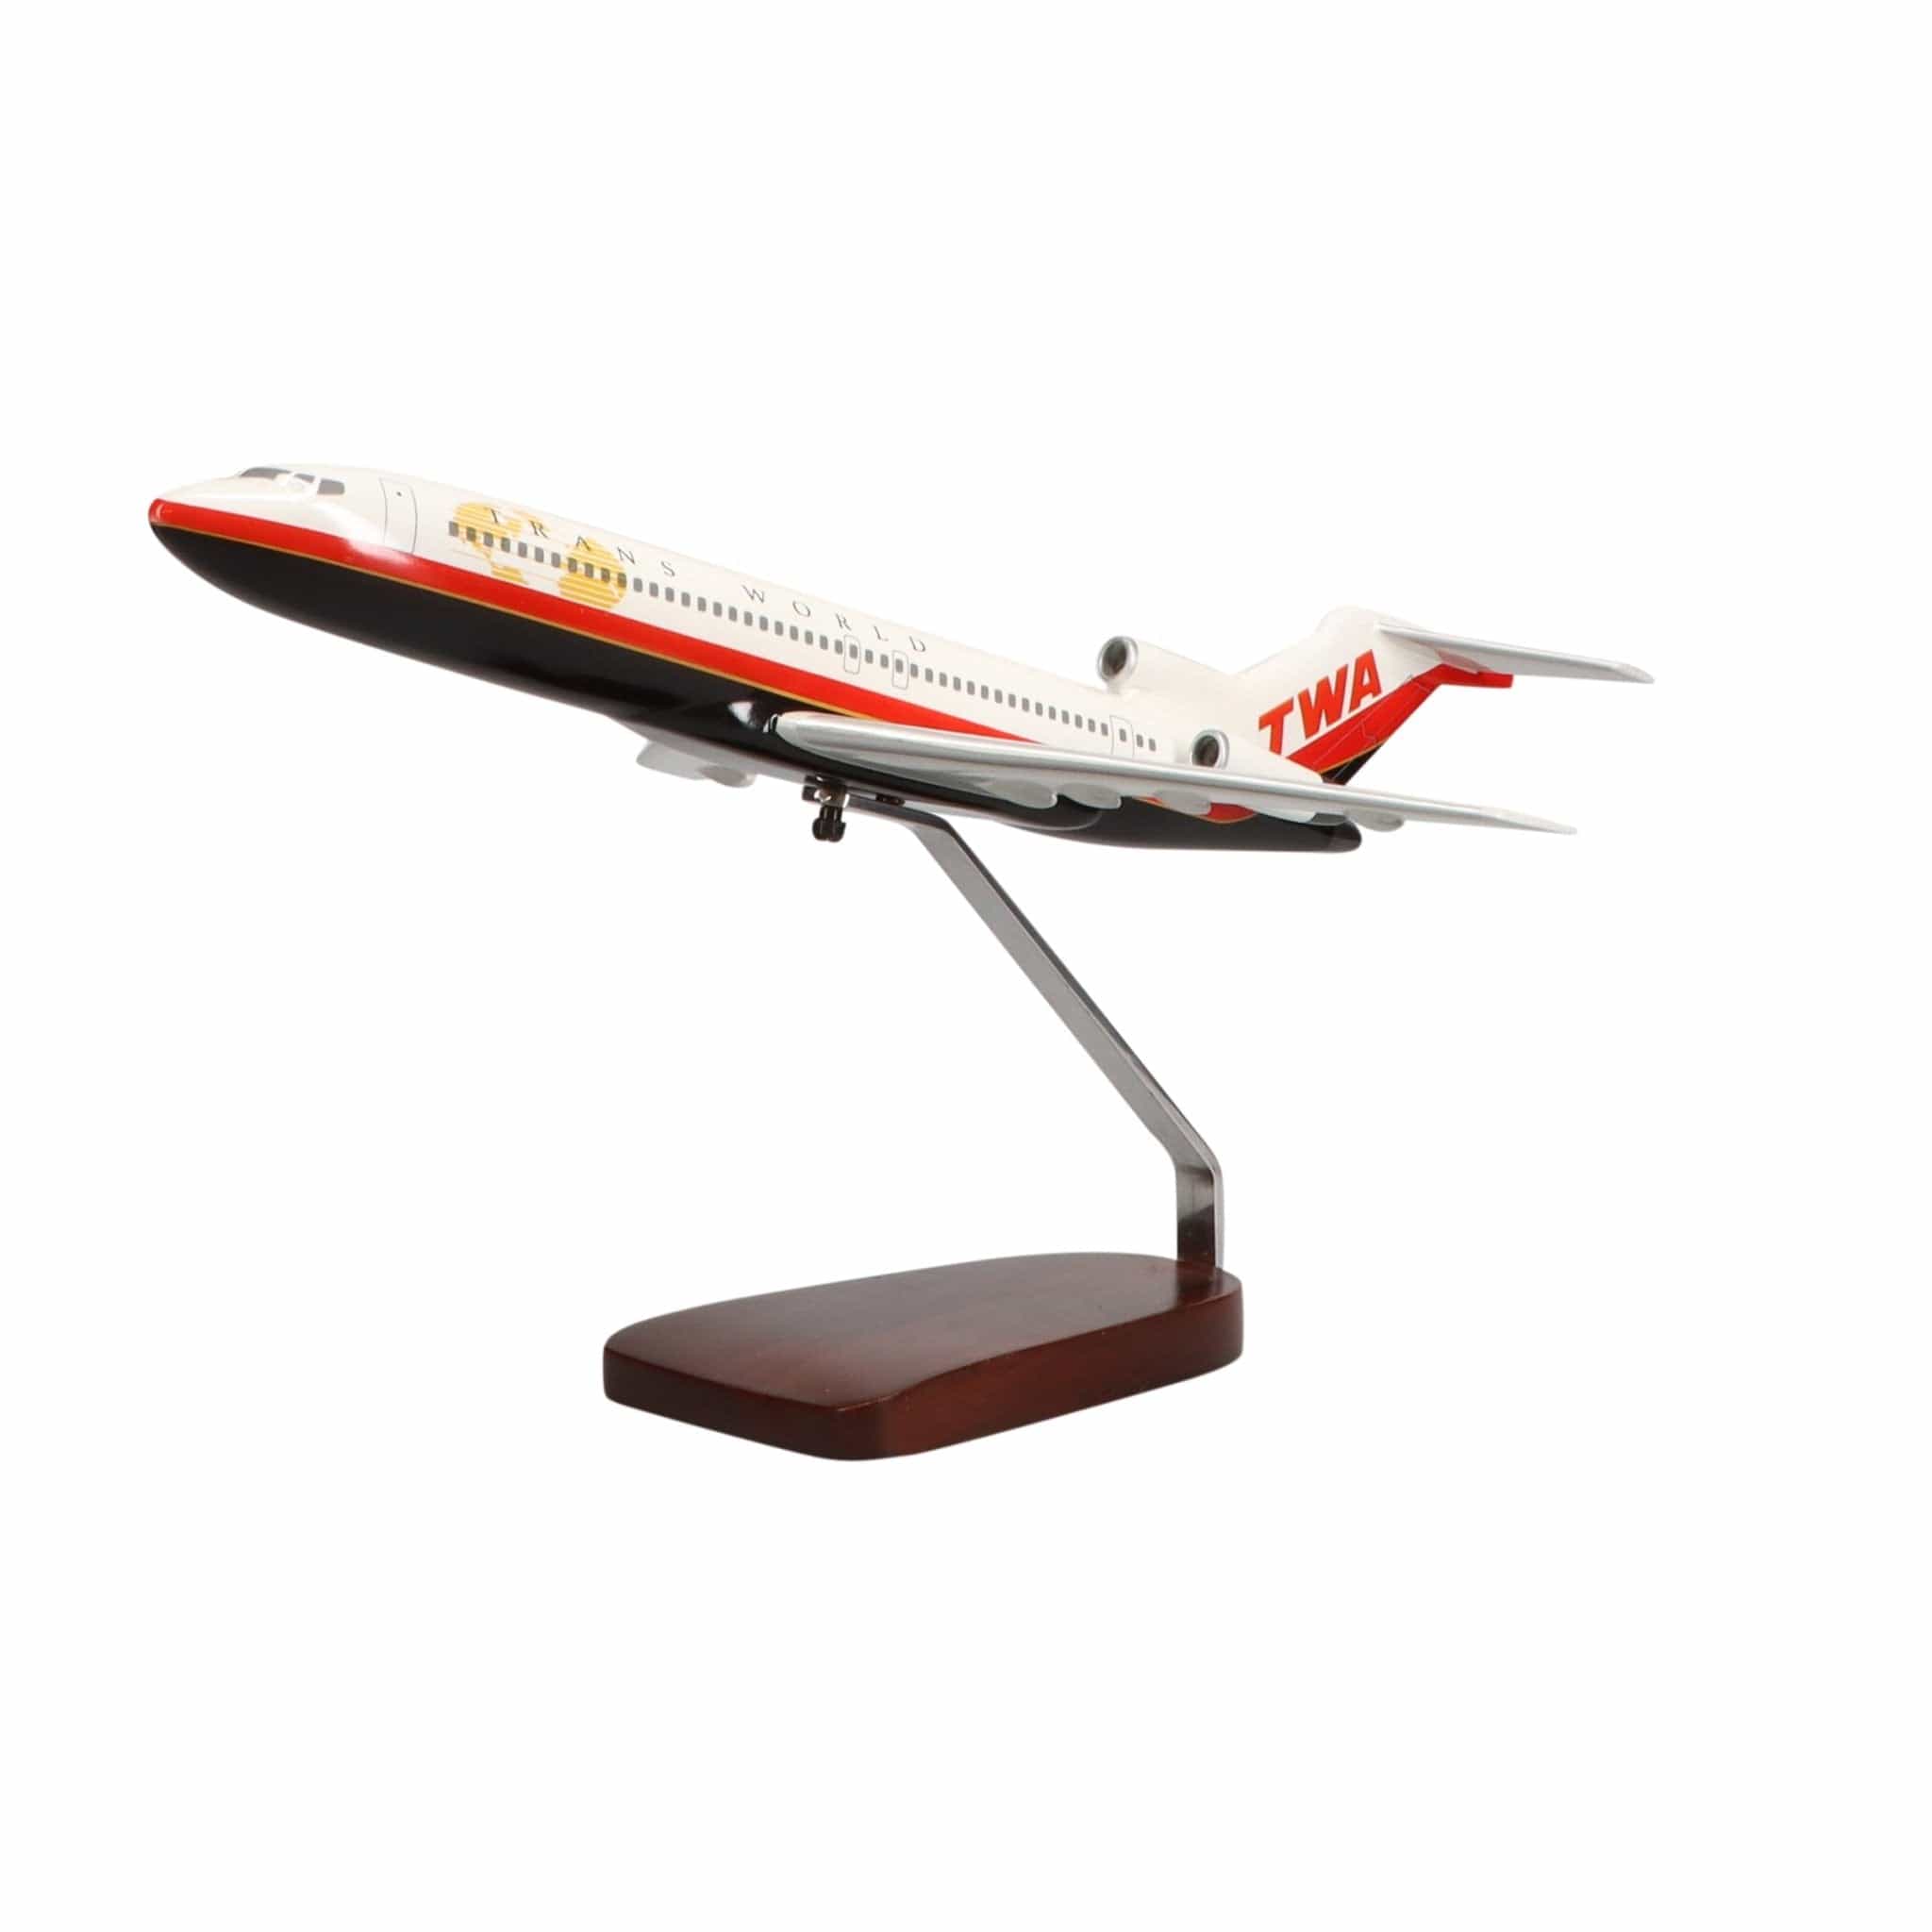 Boeing 727-200 TWA (Trans World Airlines) Large Mahogany Model